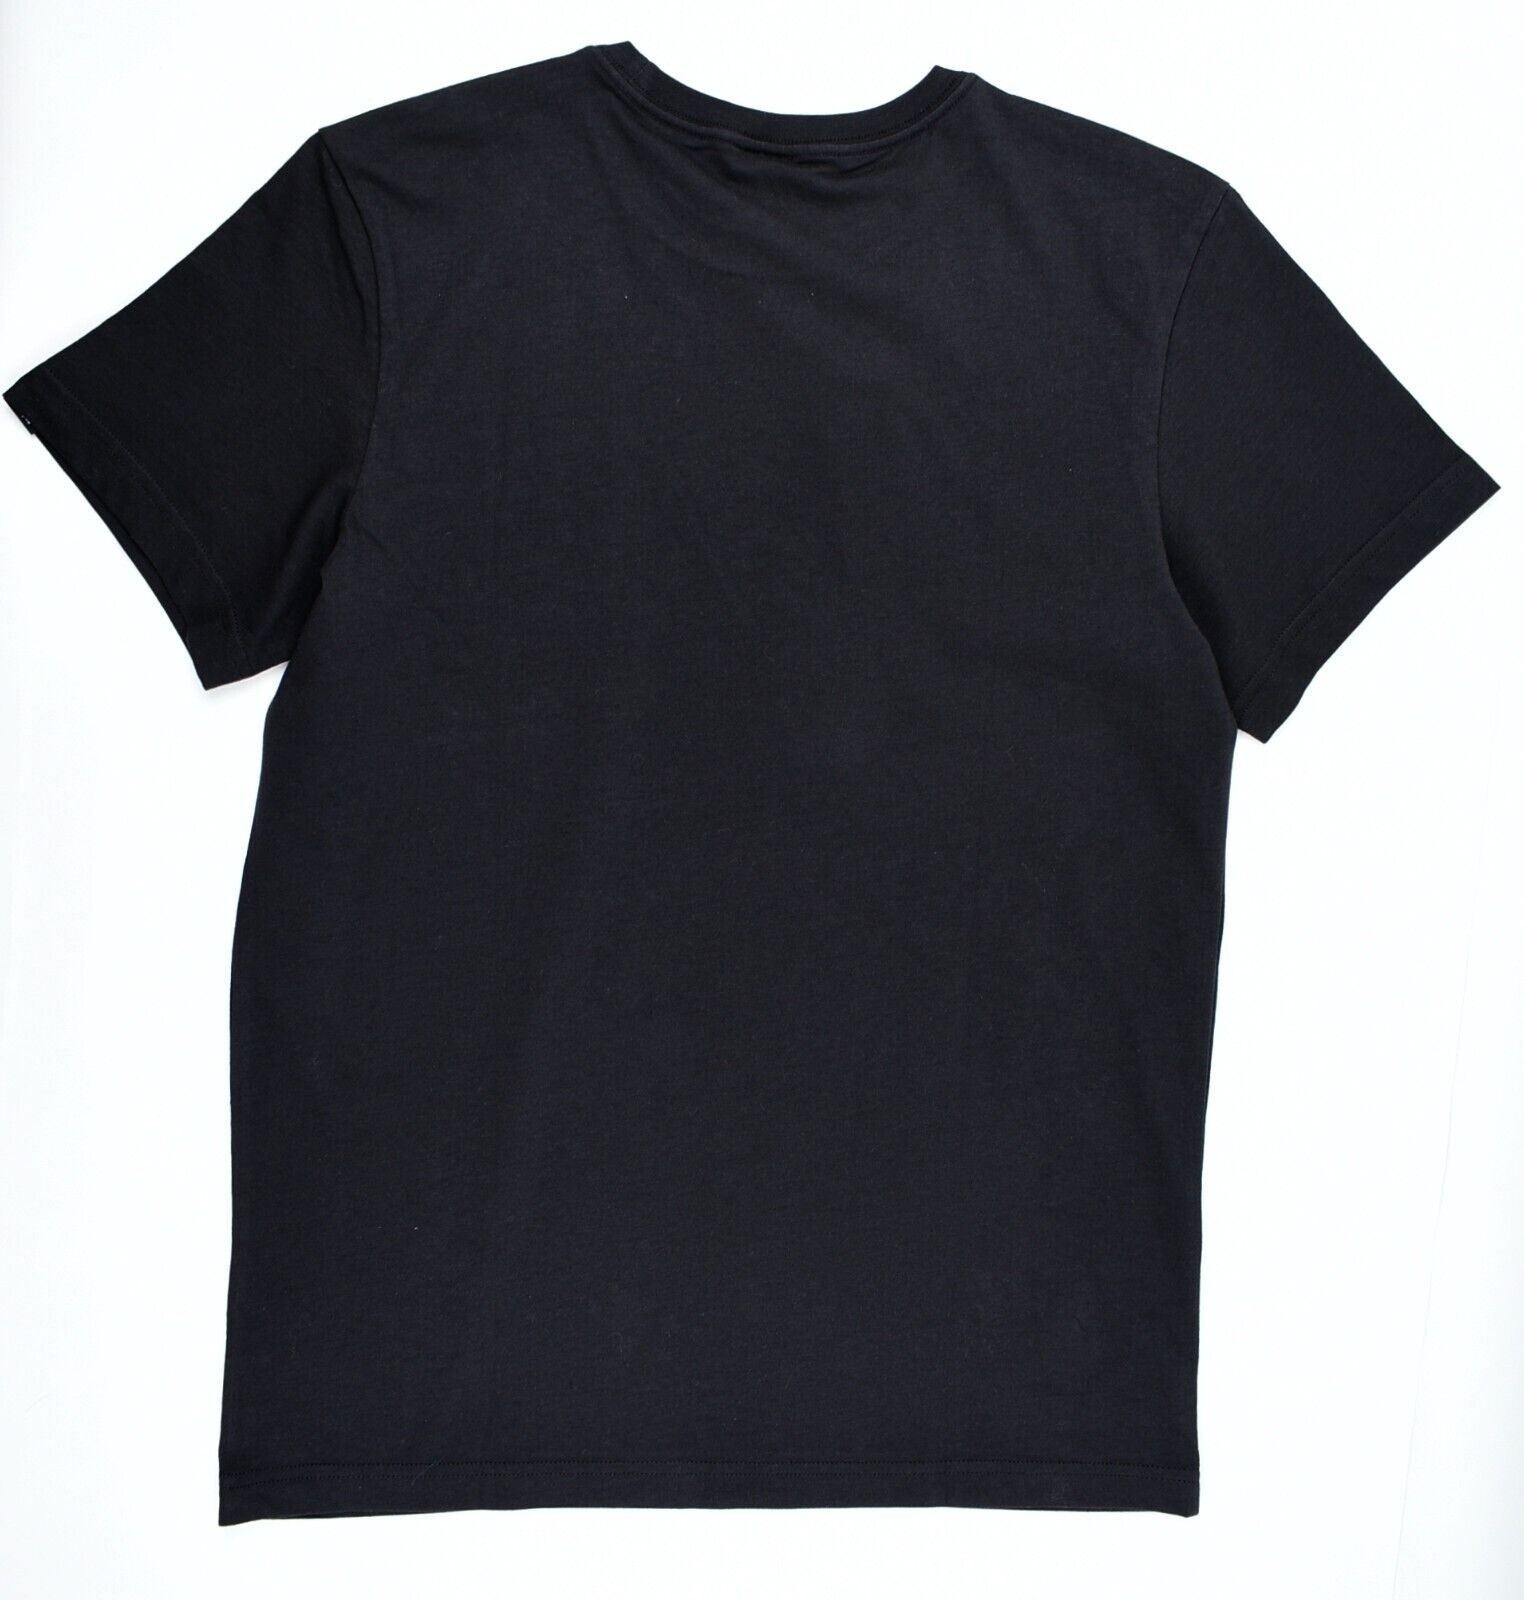 ADIDAS Women's Linear Floral Logo Crew Neck T-shirt, Black, size XS /UK 4-6